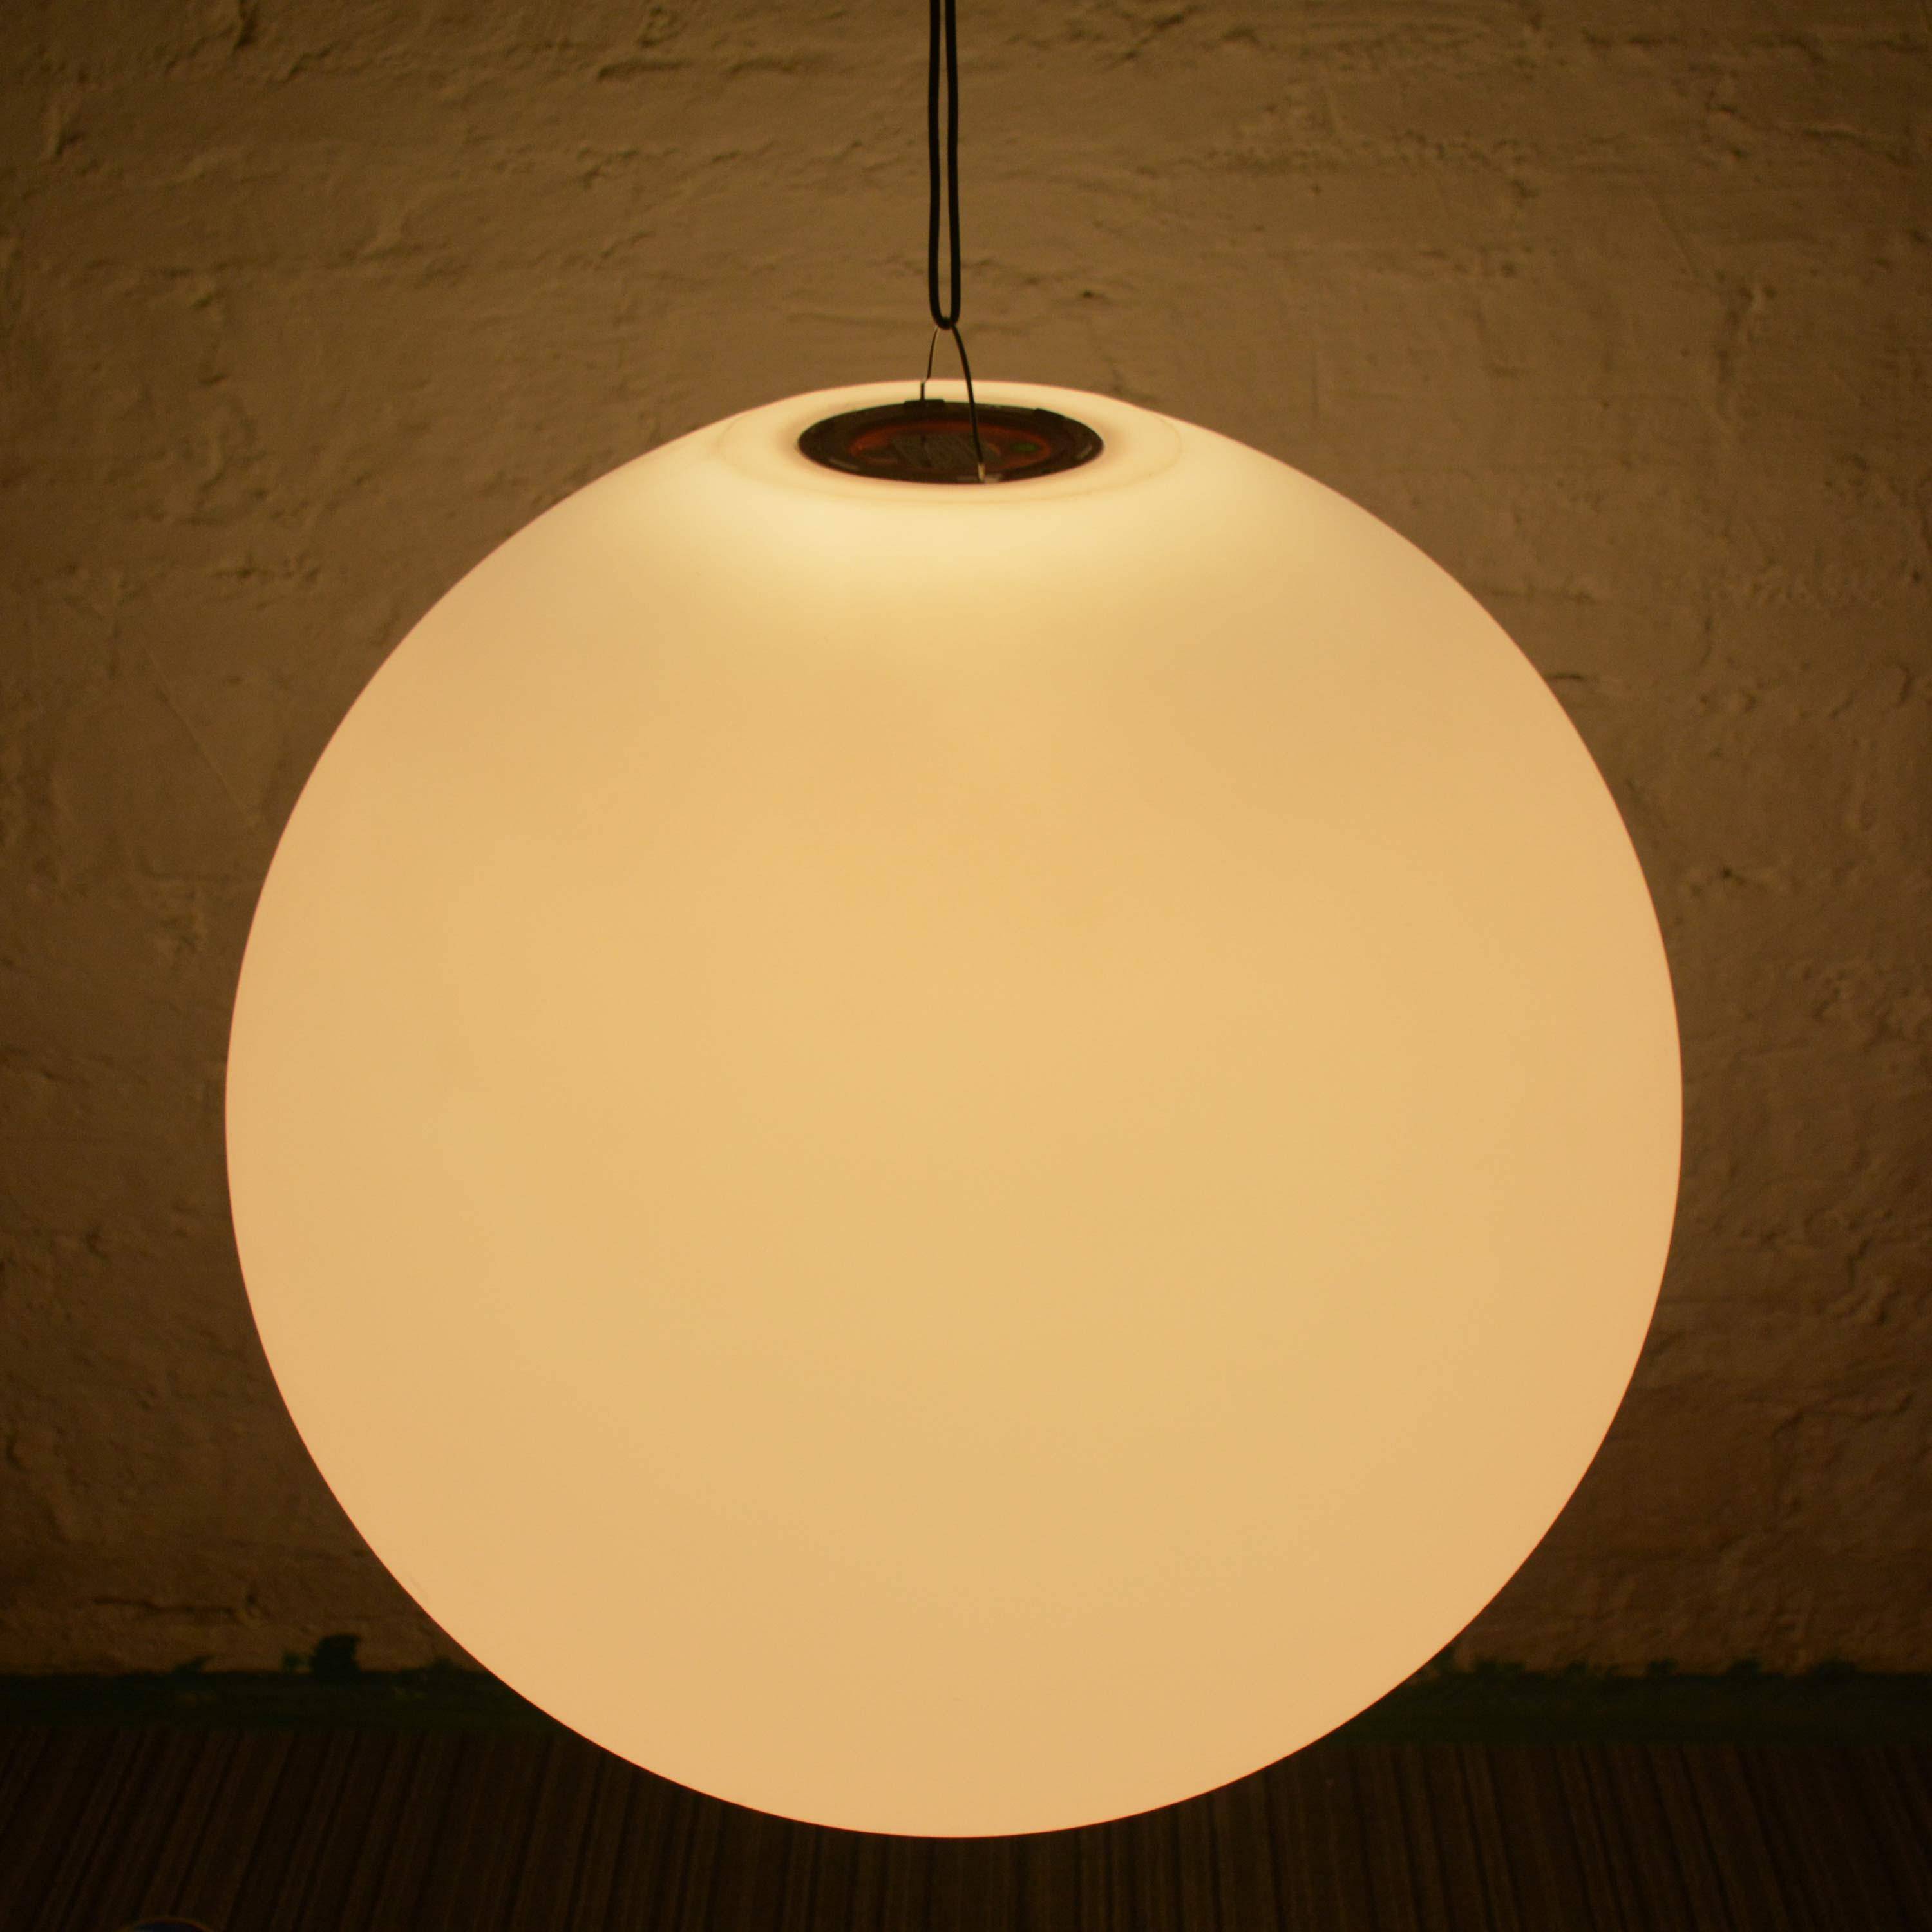 Bola LED 60cm - Esfera de luz decorativa, Ø60cm, branco cálido, controlo remoto,sweeek,Photo5